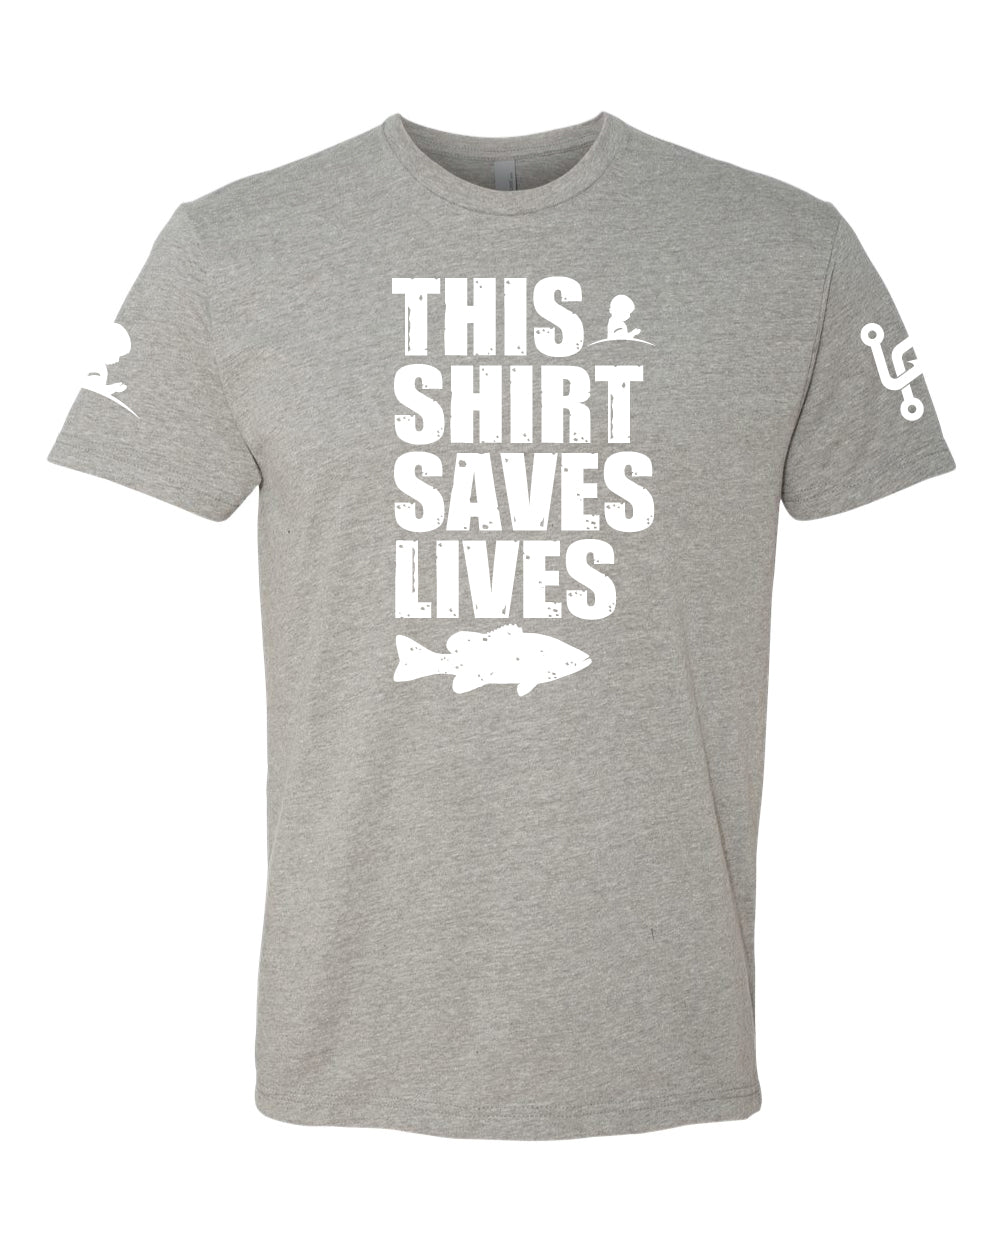 This Shirt Saves Lives